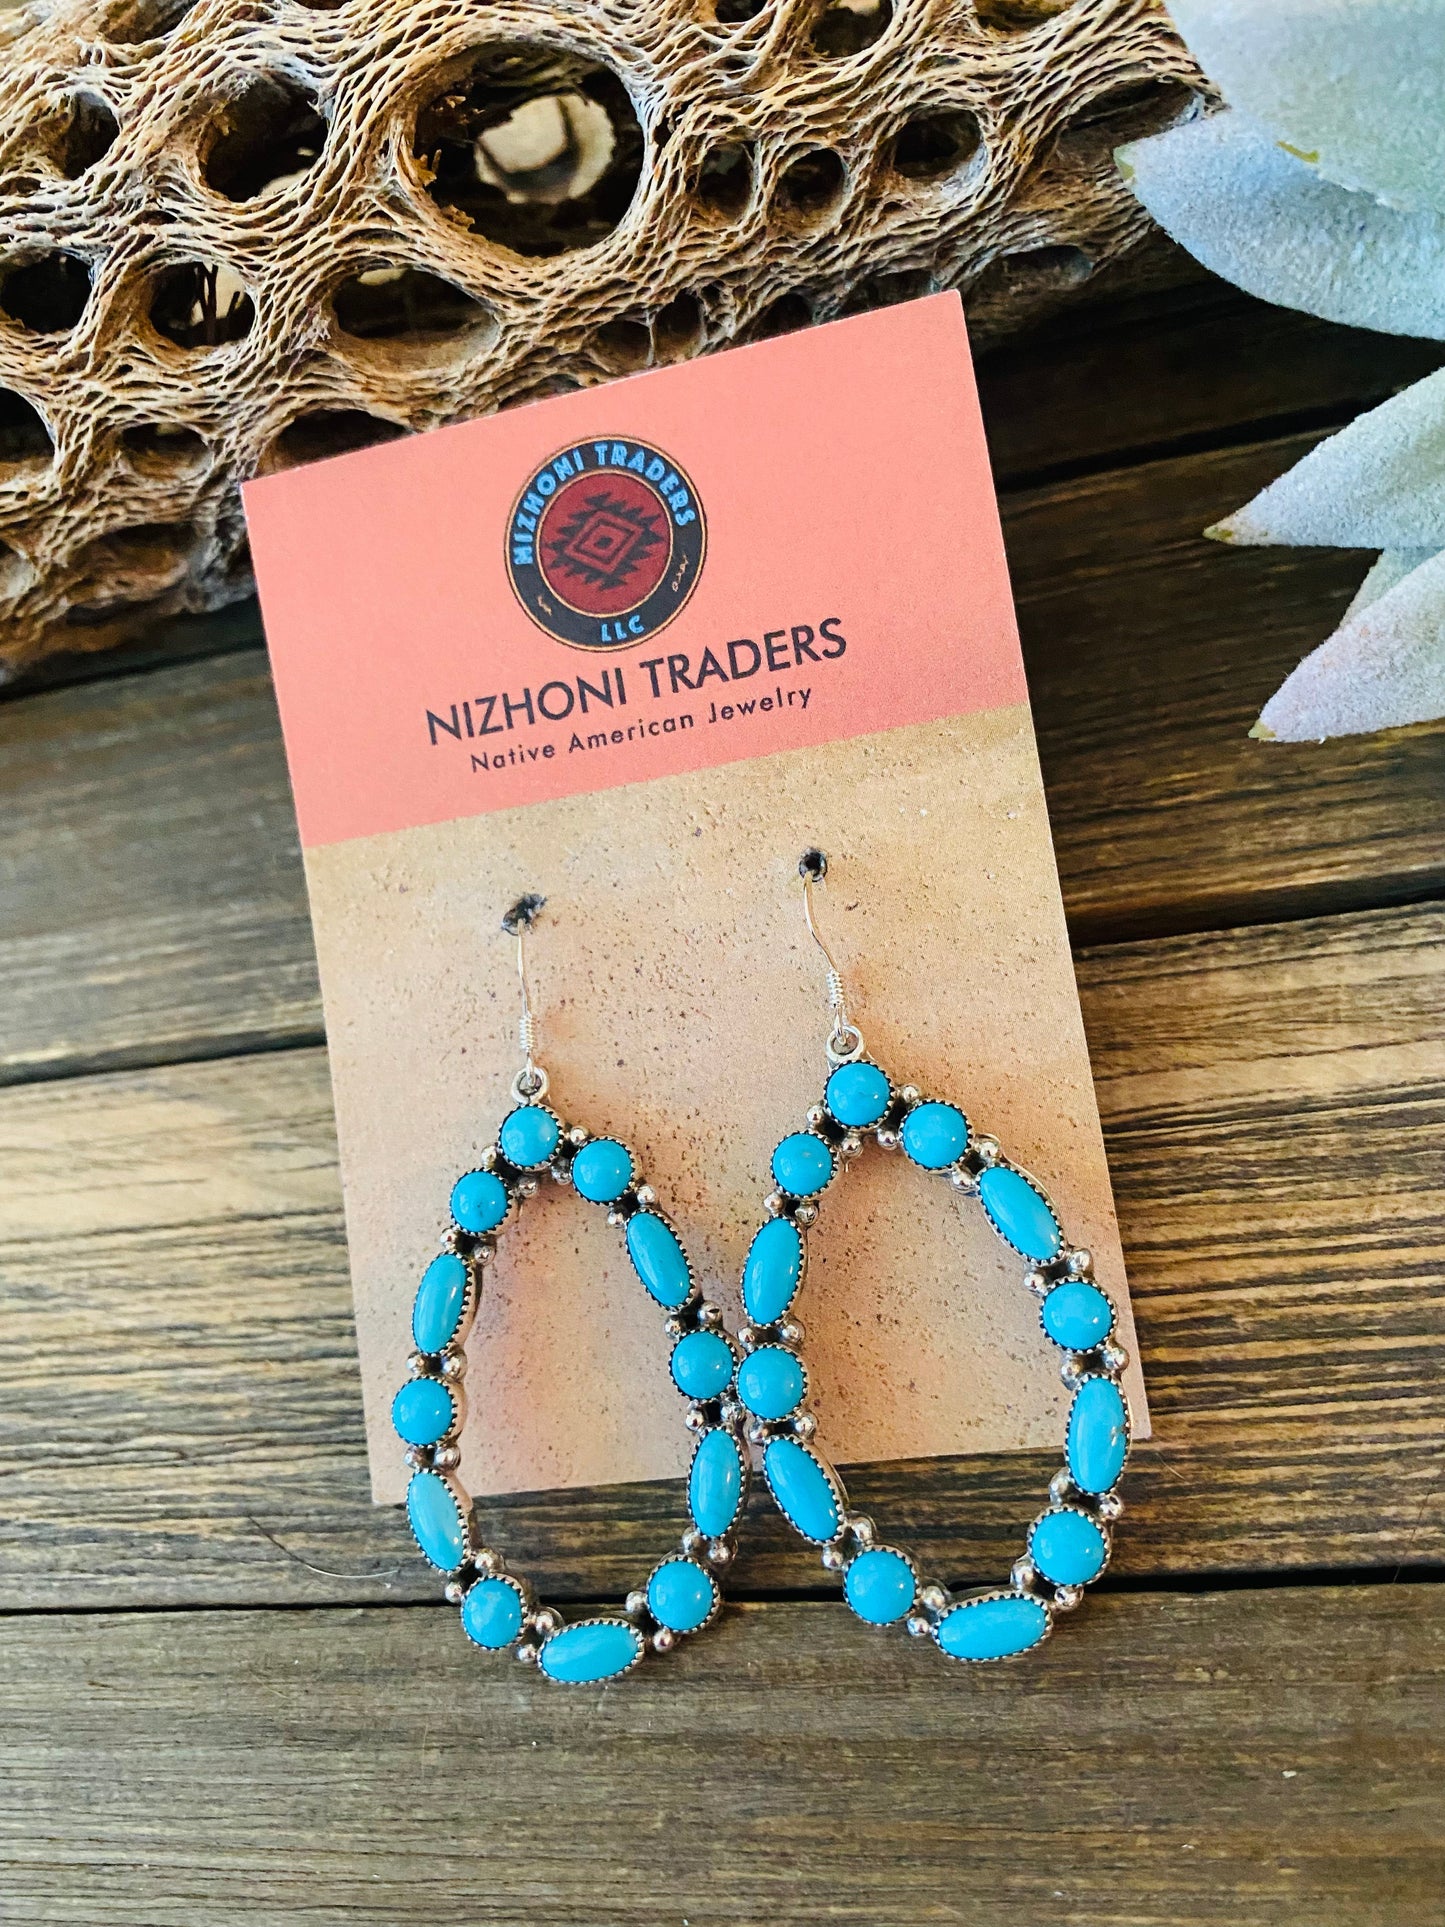 Navajo Sleeping Beauty Turquoise & Sterling Silver Dangle Earrings